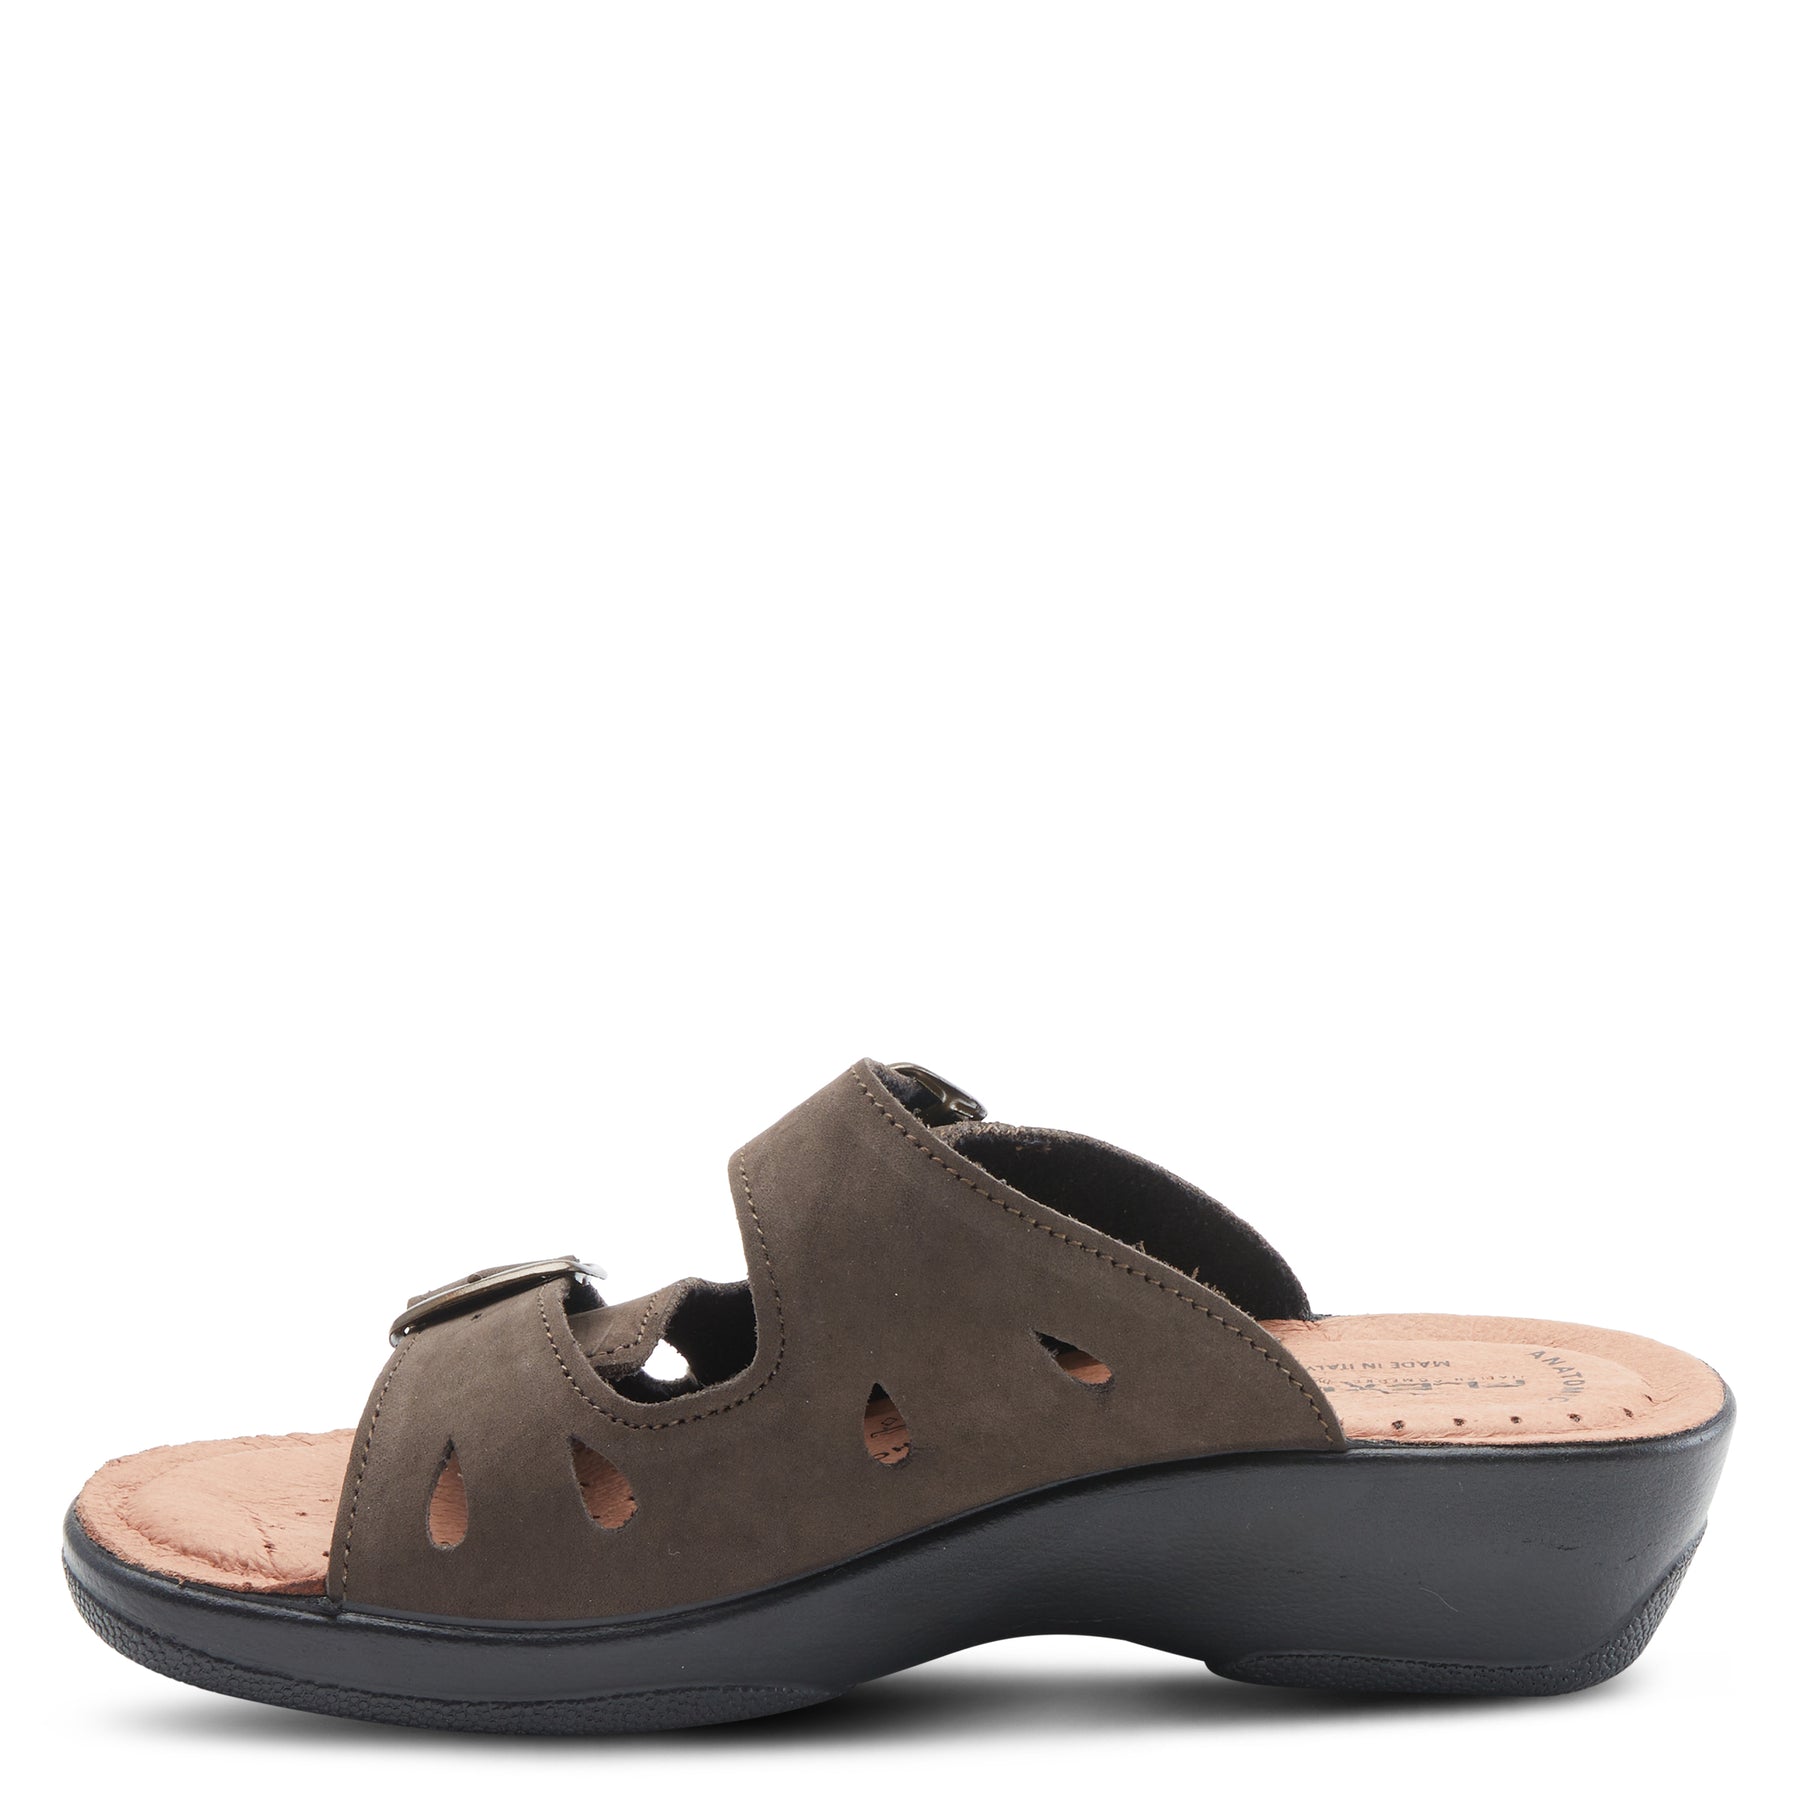 Flexus Decca Slide Sandal for Summer Style – Spring Step Shoes